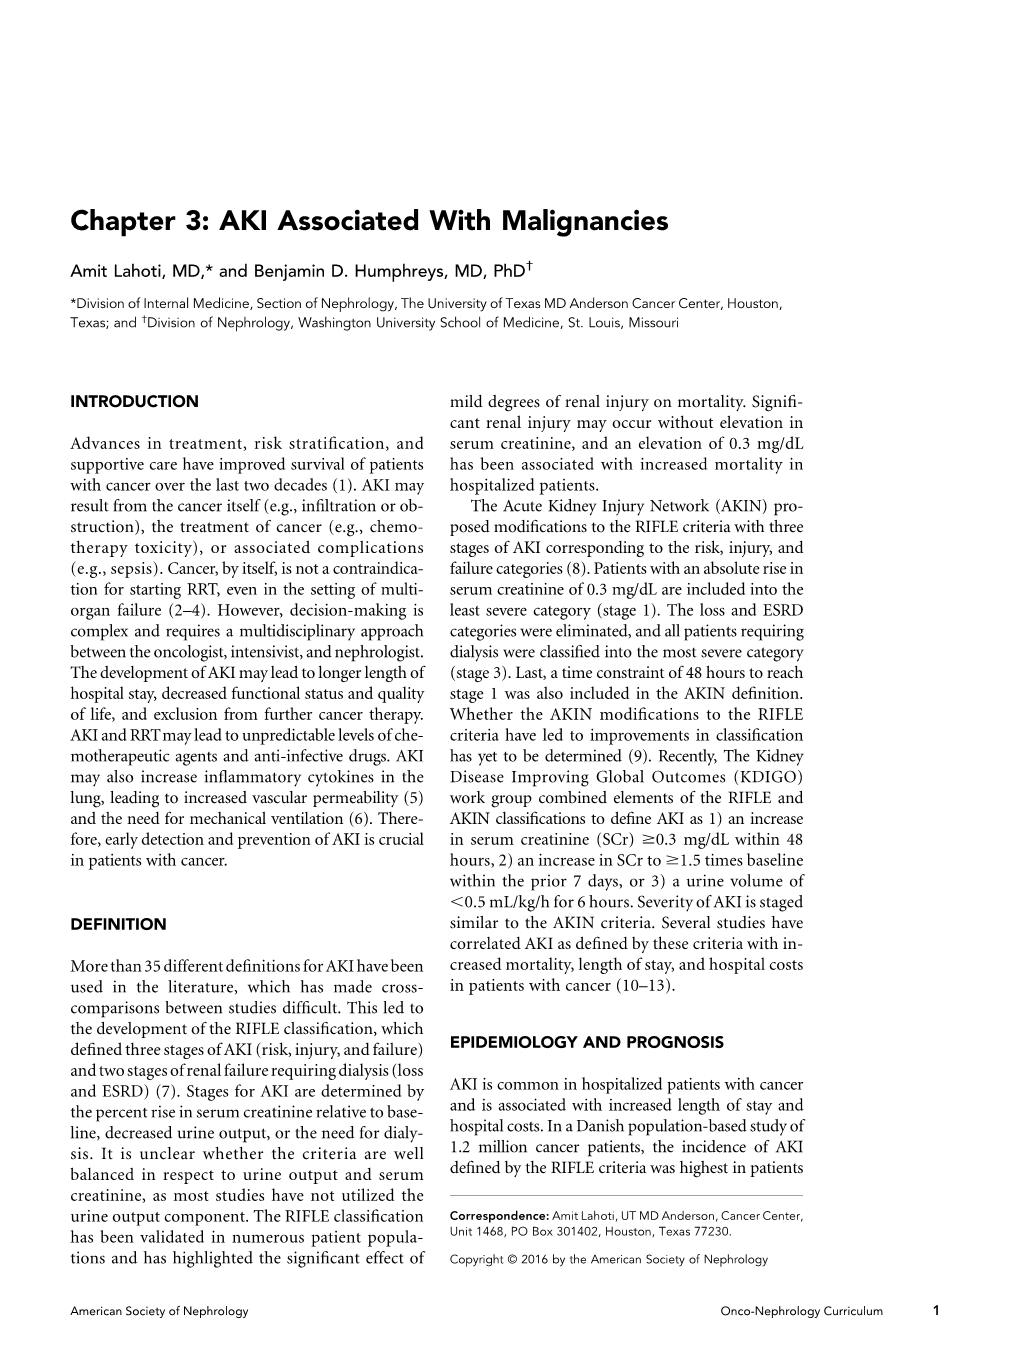 Chapter 3: AKI Associated with Malignancies